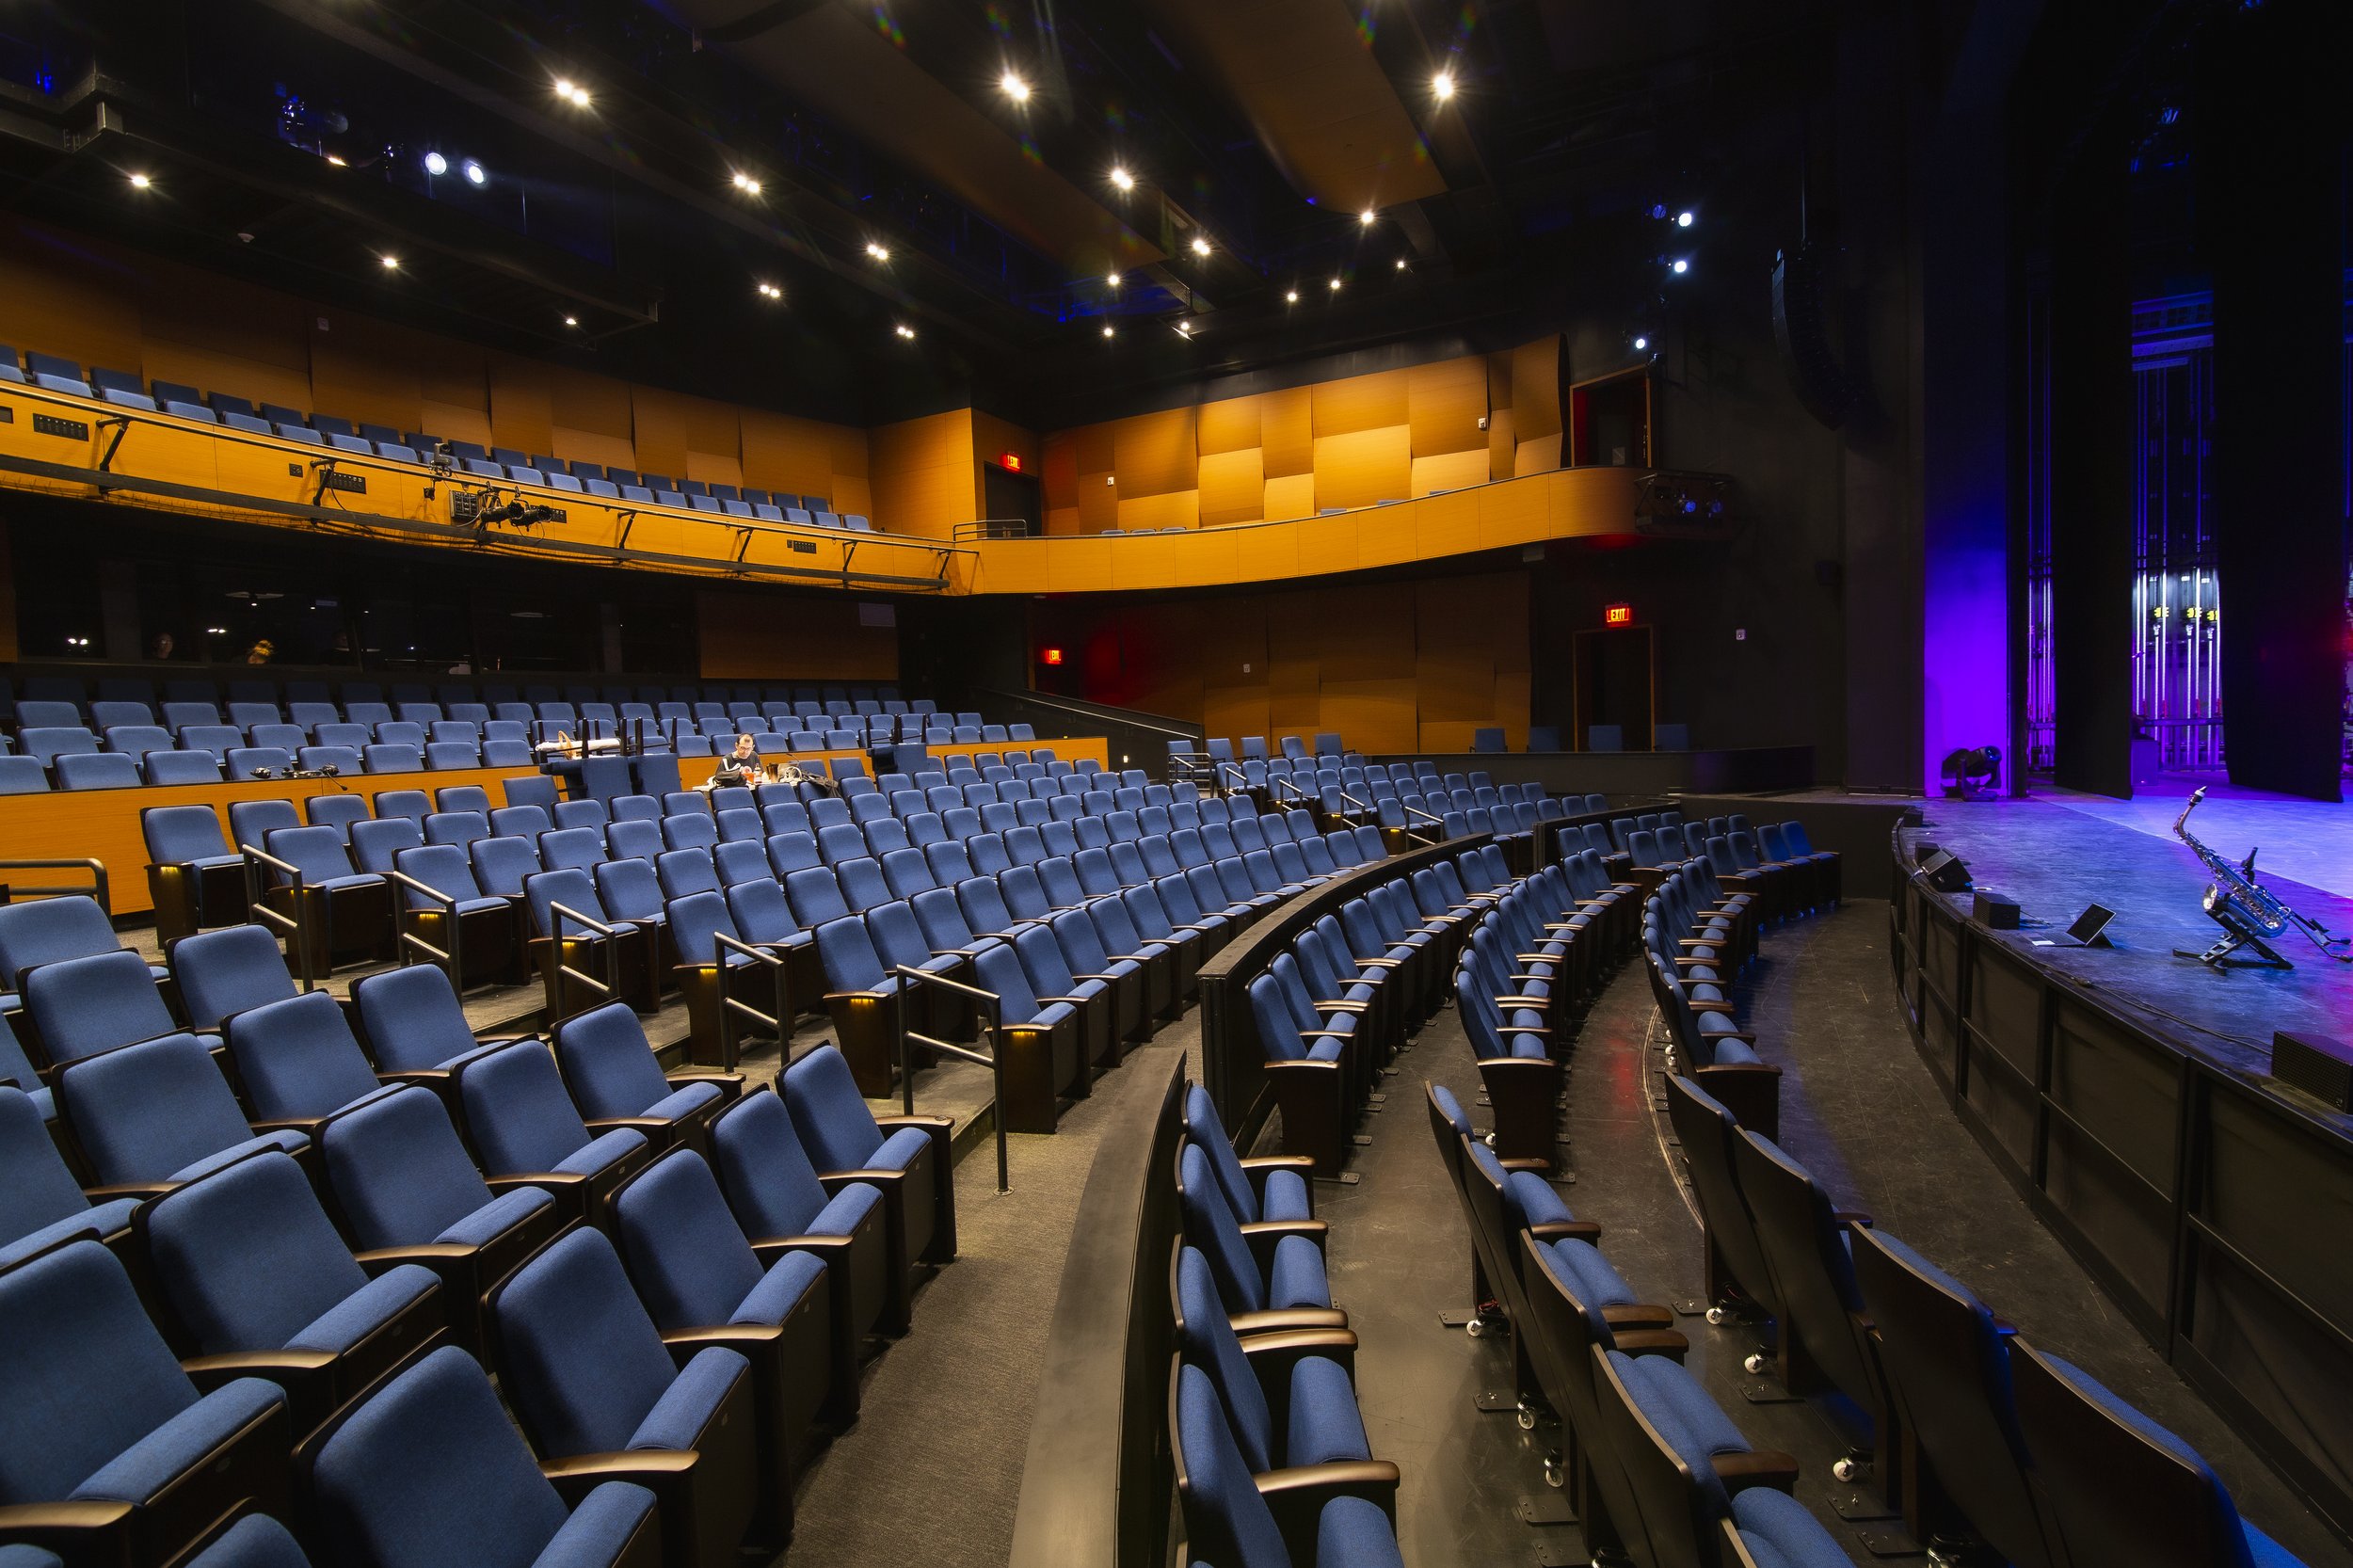 New Brunswick Performing Arts Center